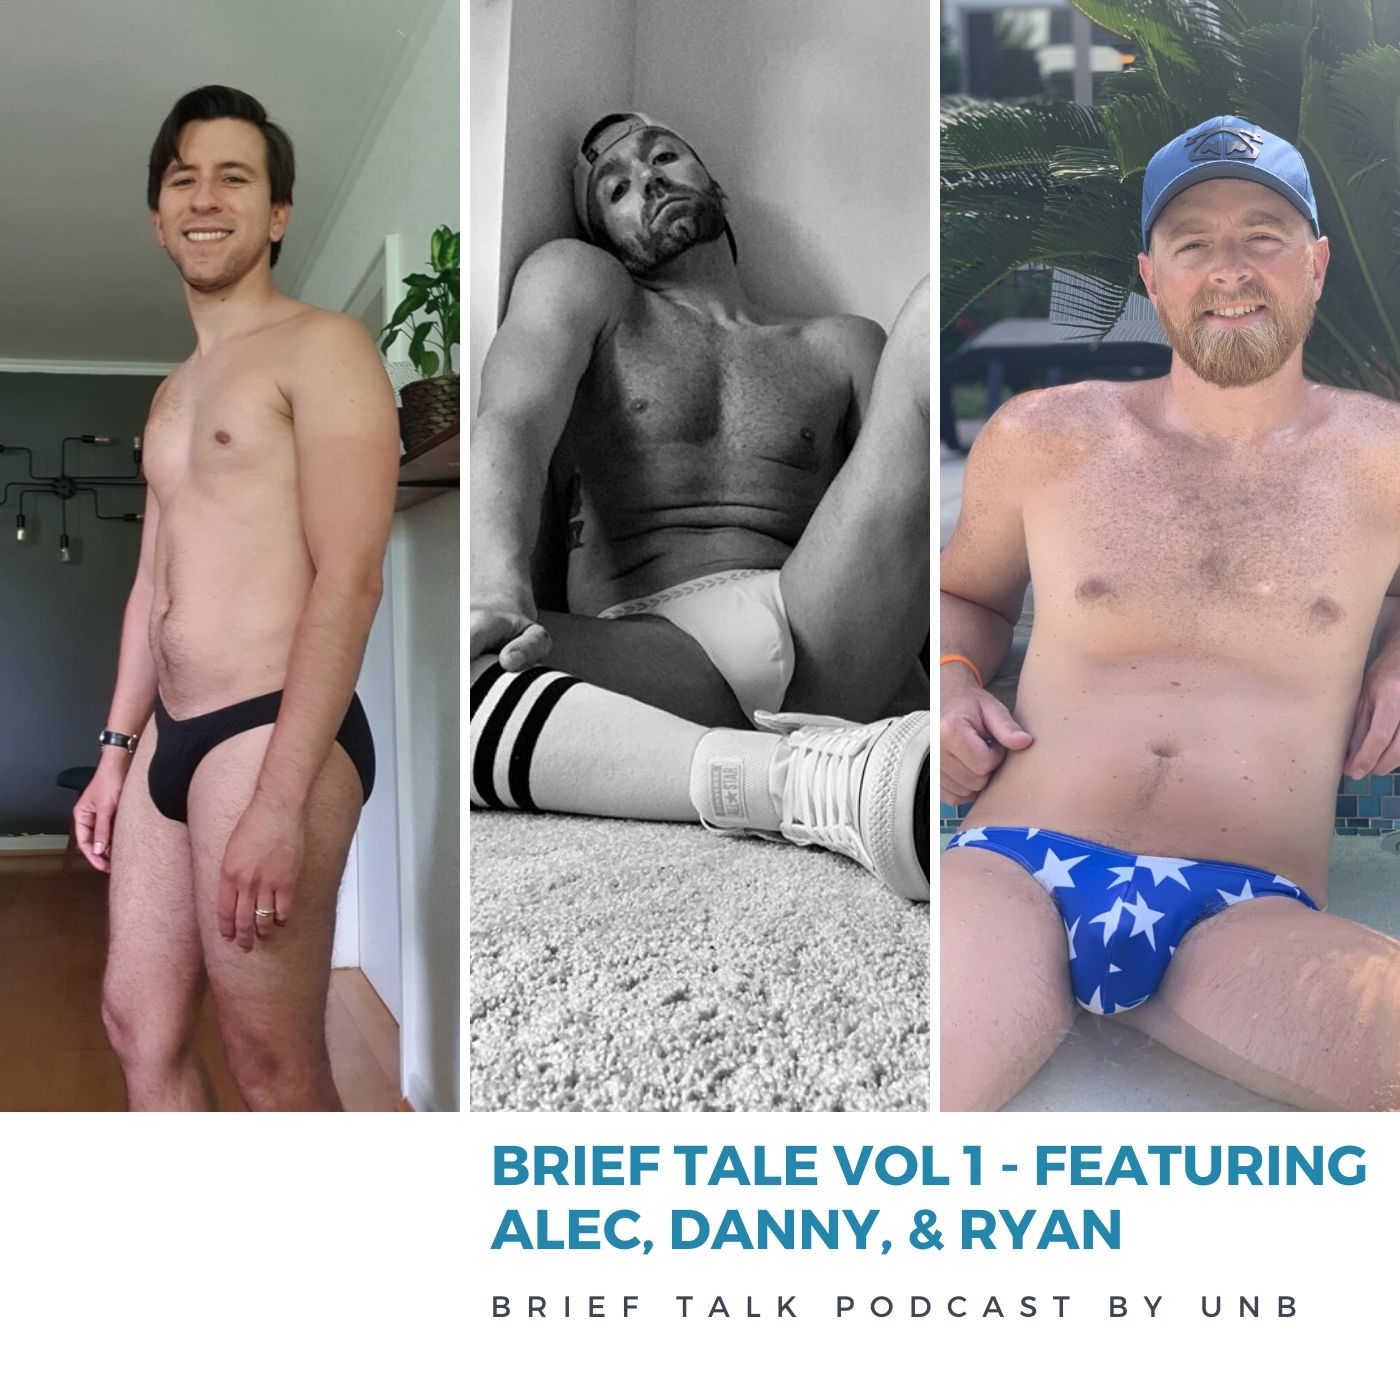 Brief Talk Podcast - Brief Tale by Alec & Danny